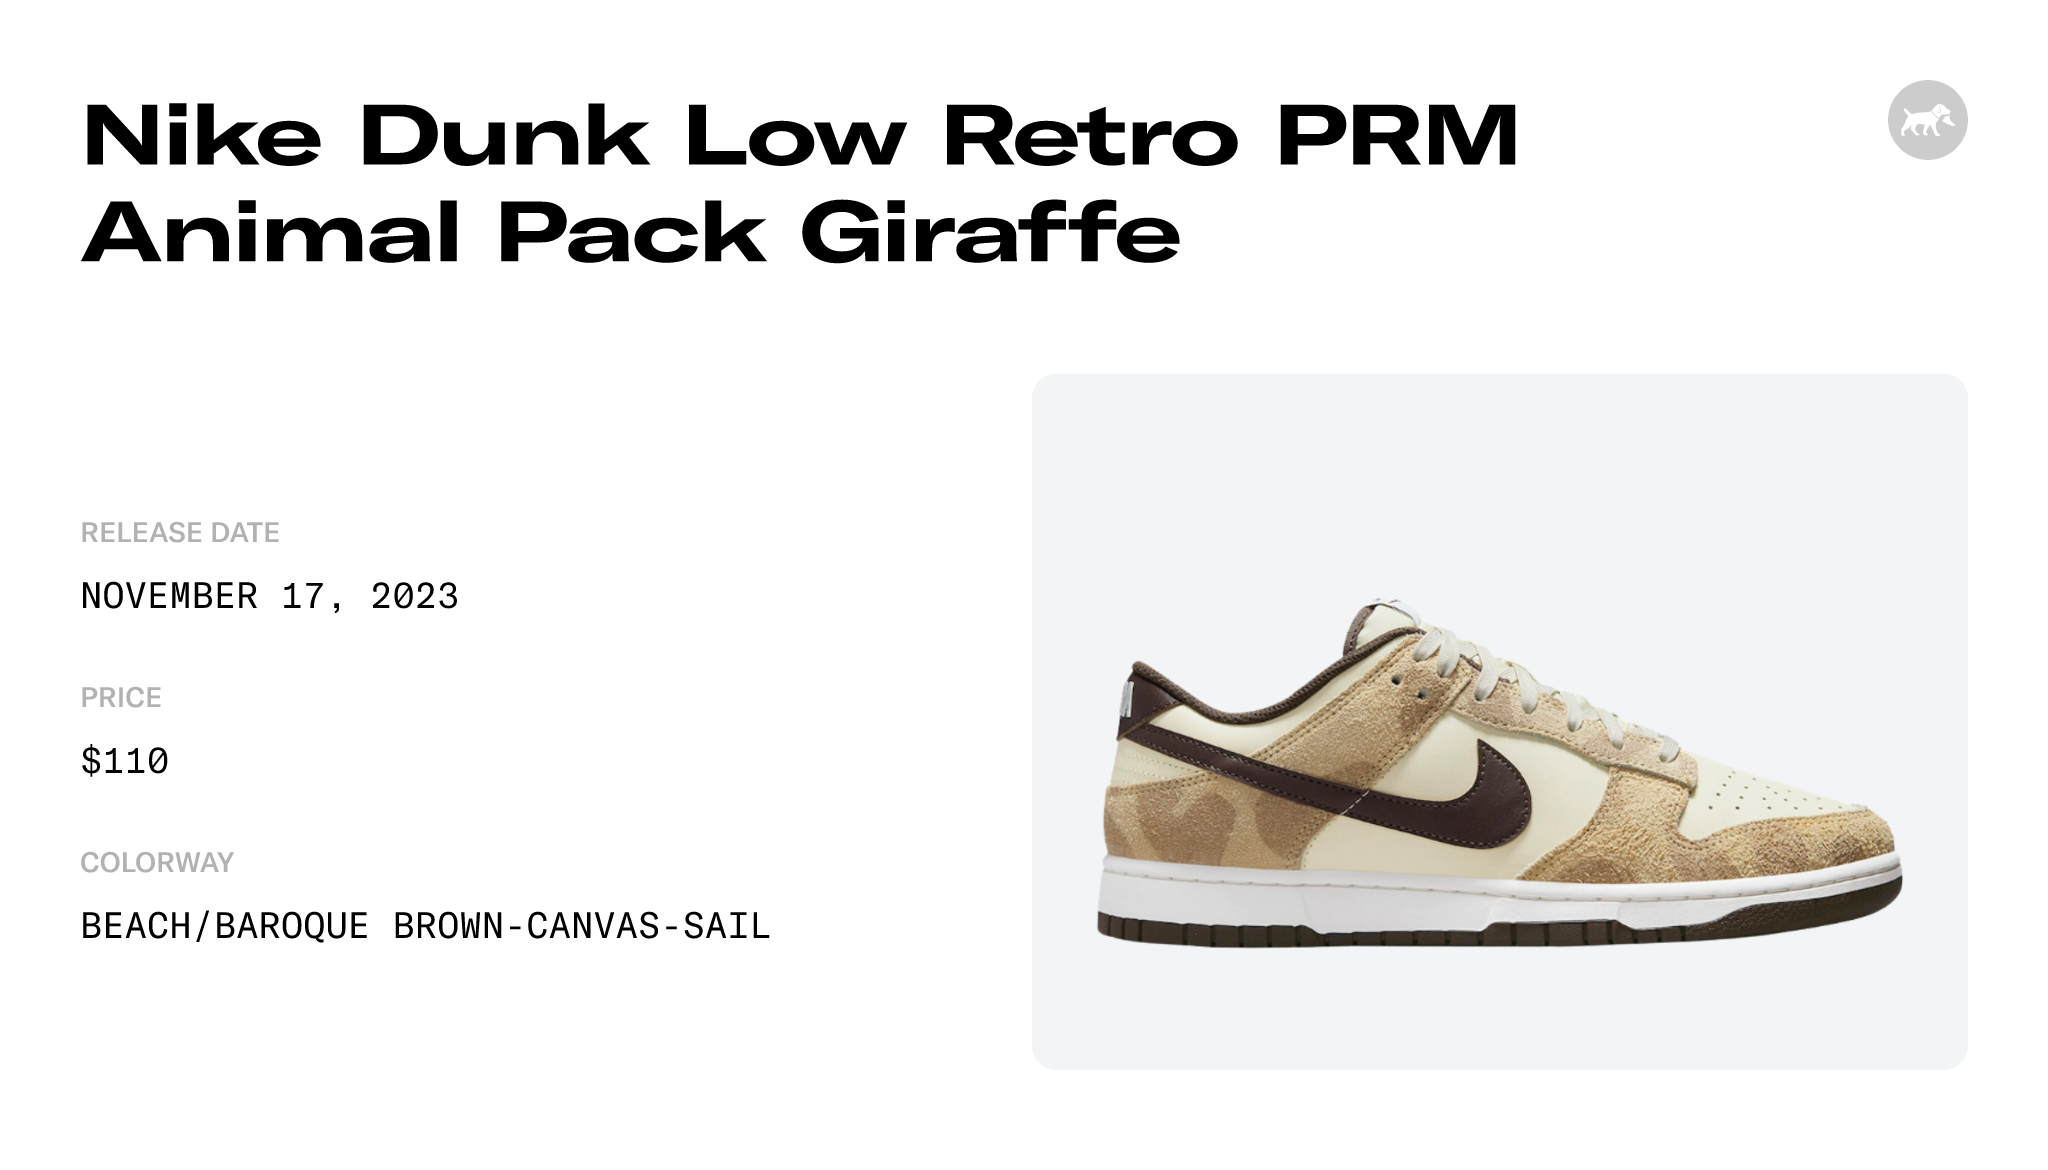 Nike Dunk Low Retro PRM Animal Pack Giraffe/Cheetah Men's - DH7913-200 - US